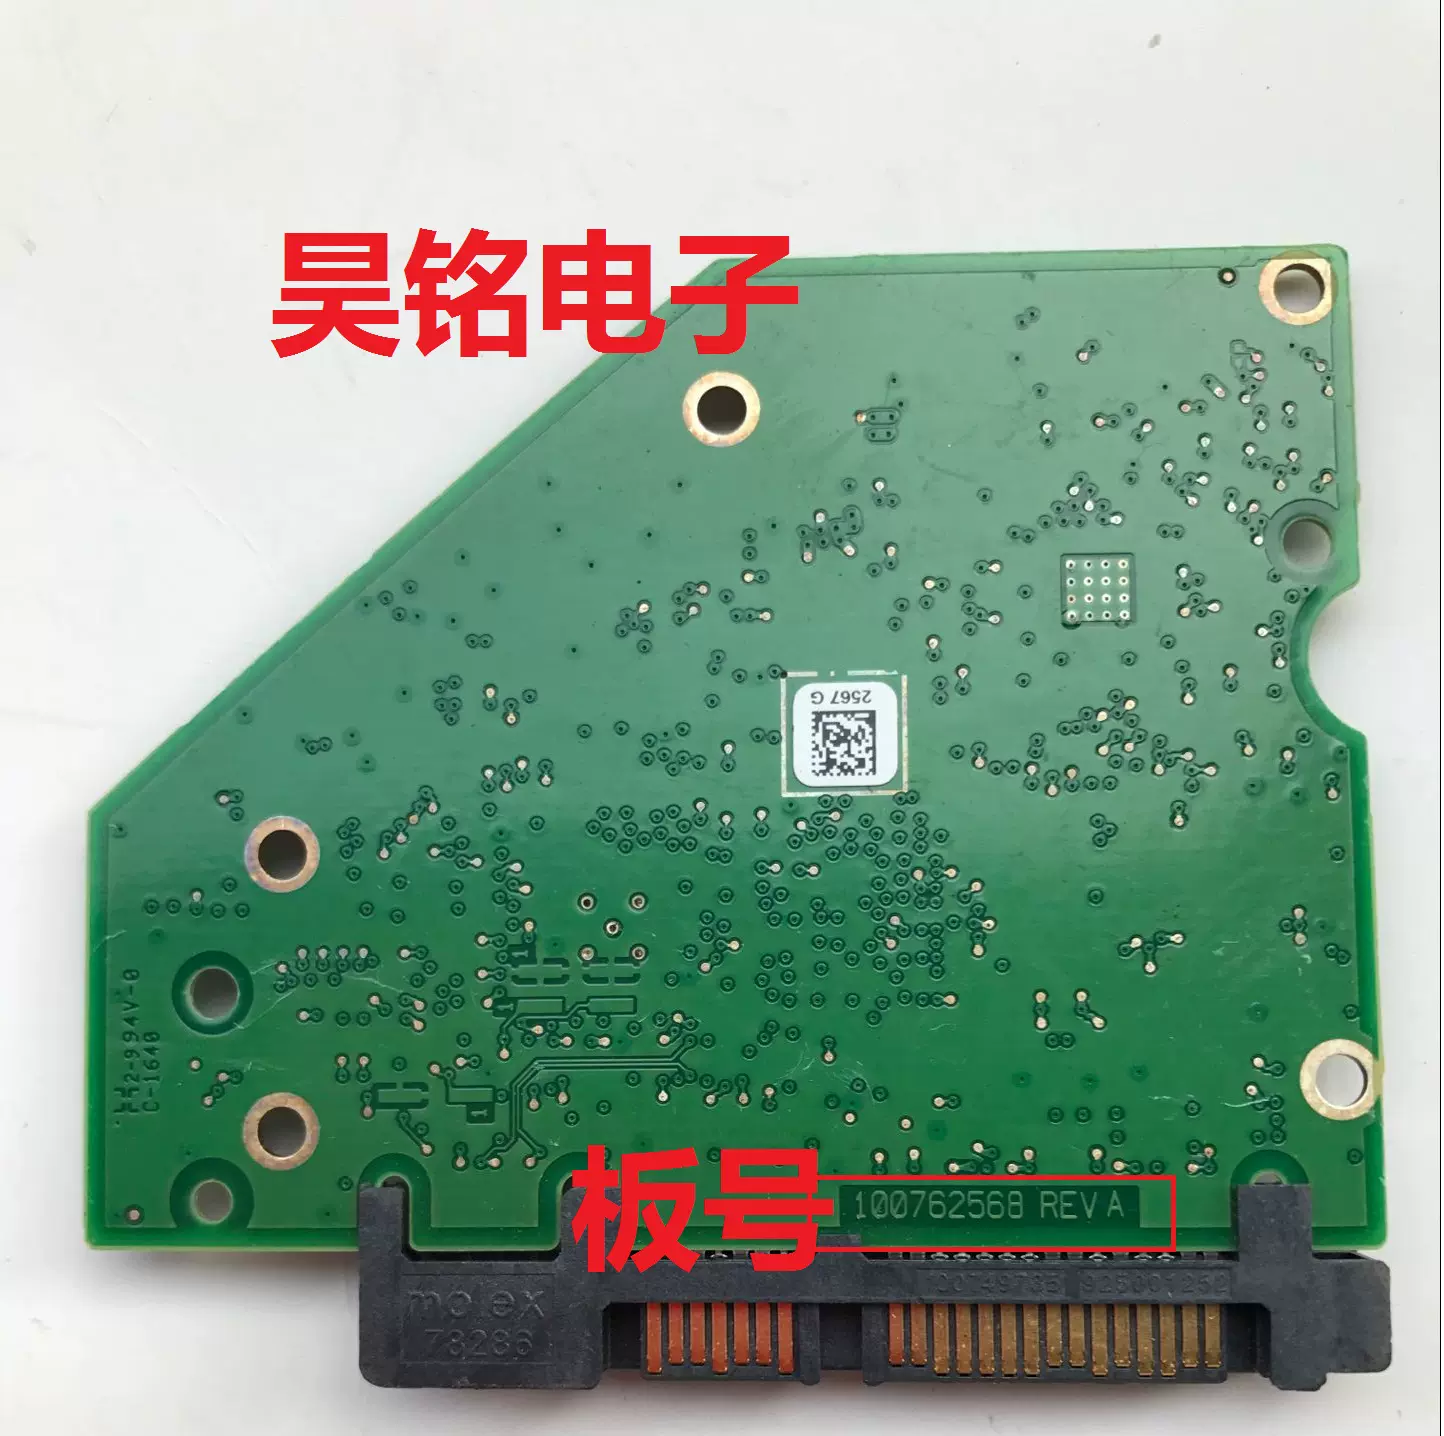 ST 希捷桌上型電腦硬碟PCB 電路板板號100762568 REV A 維修等-Taobao